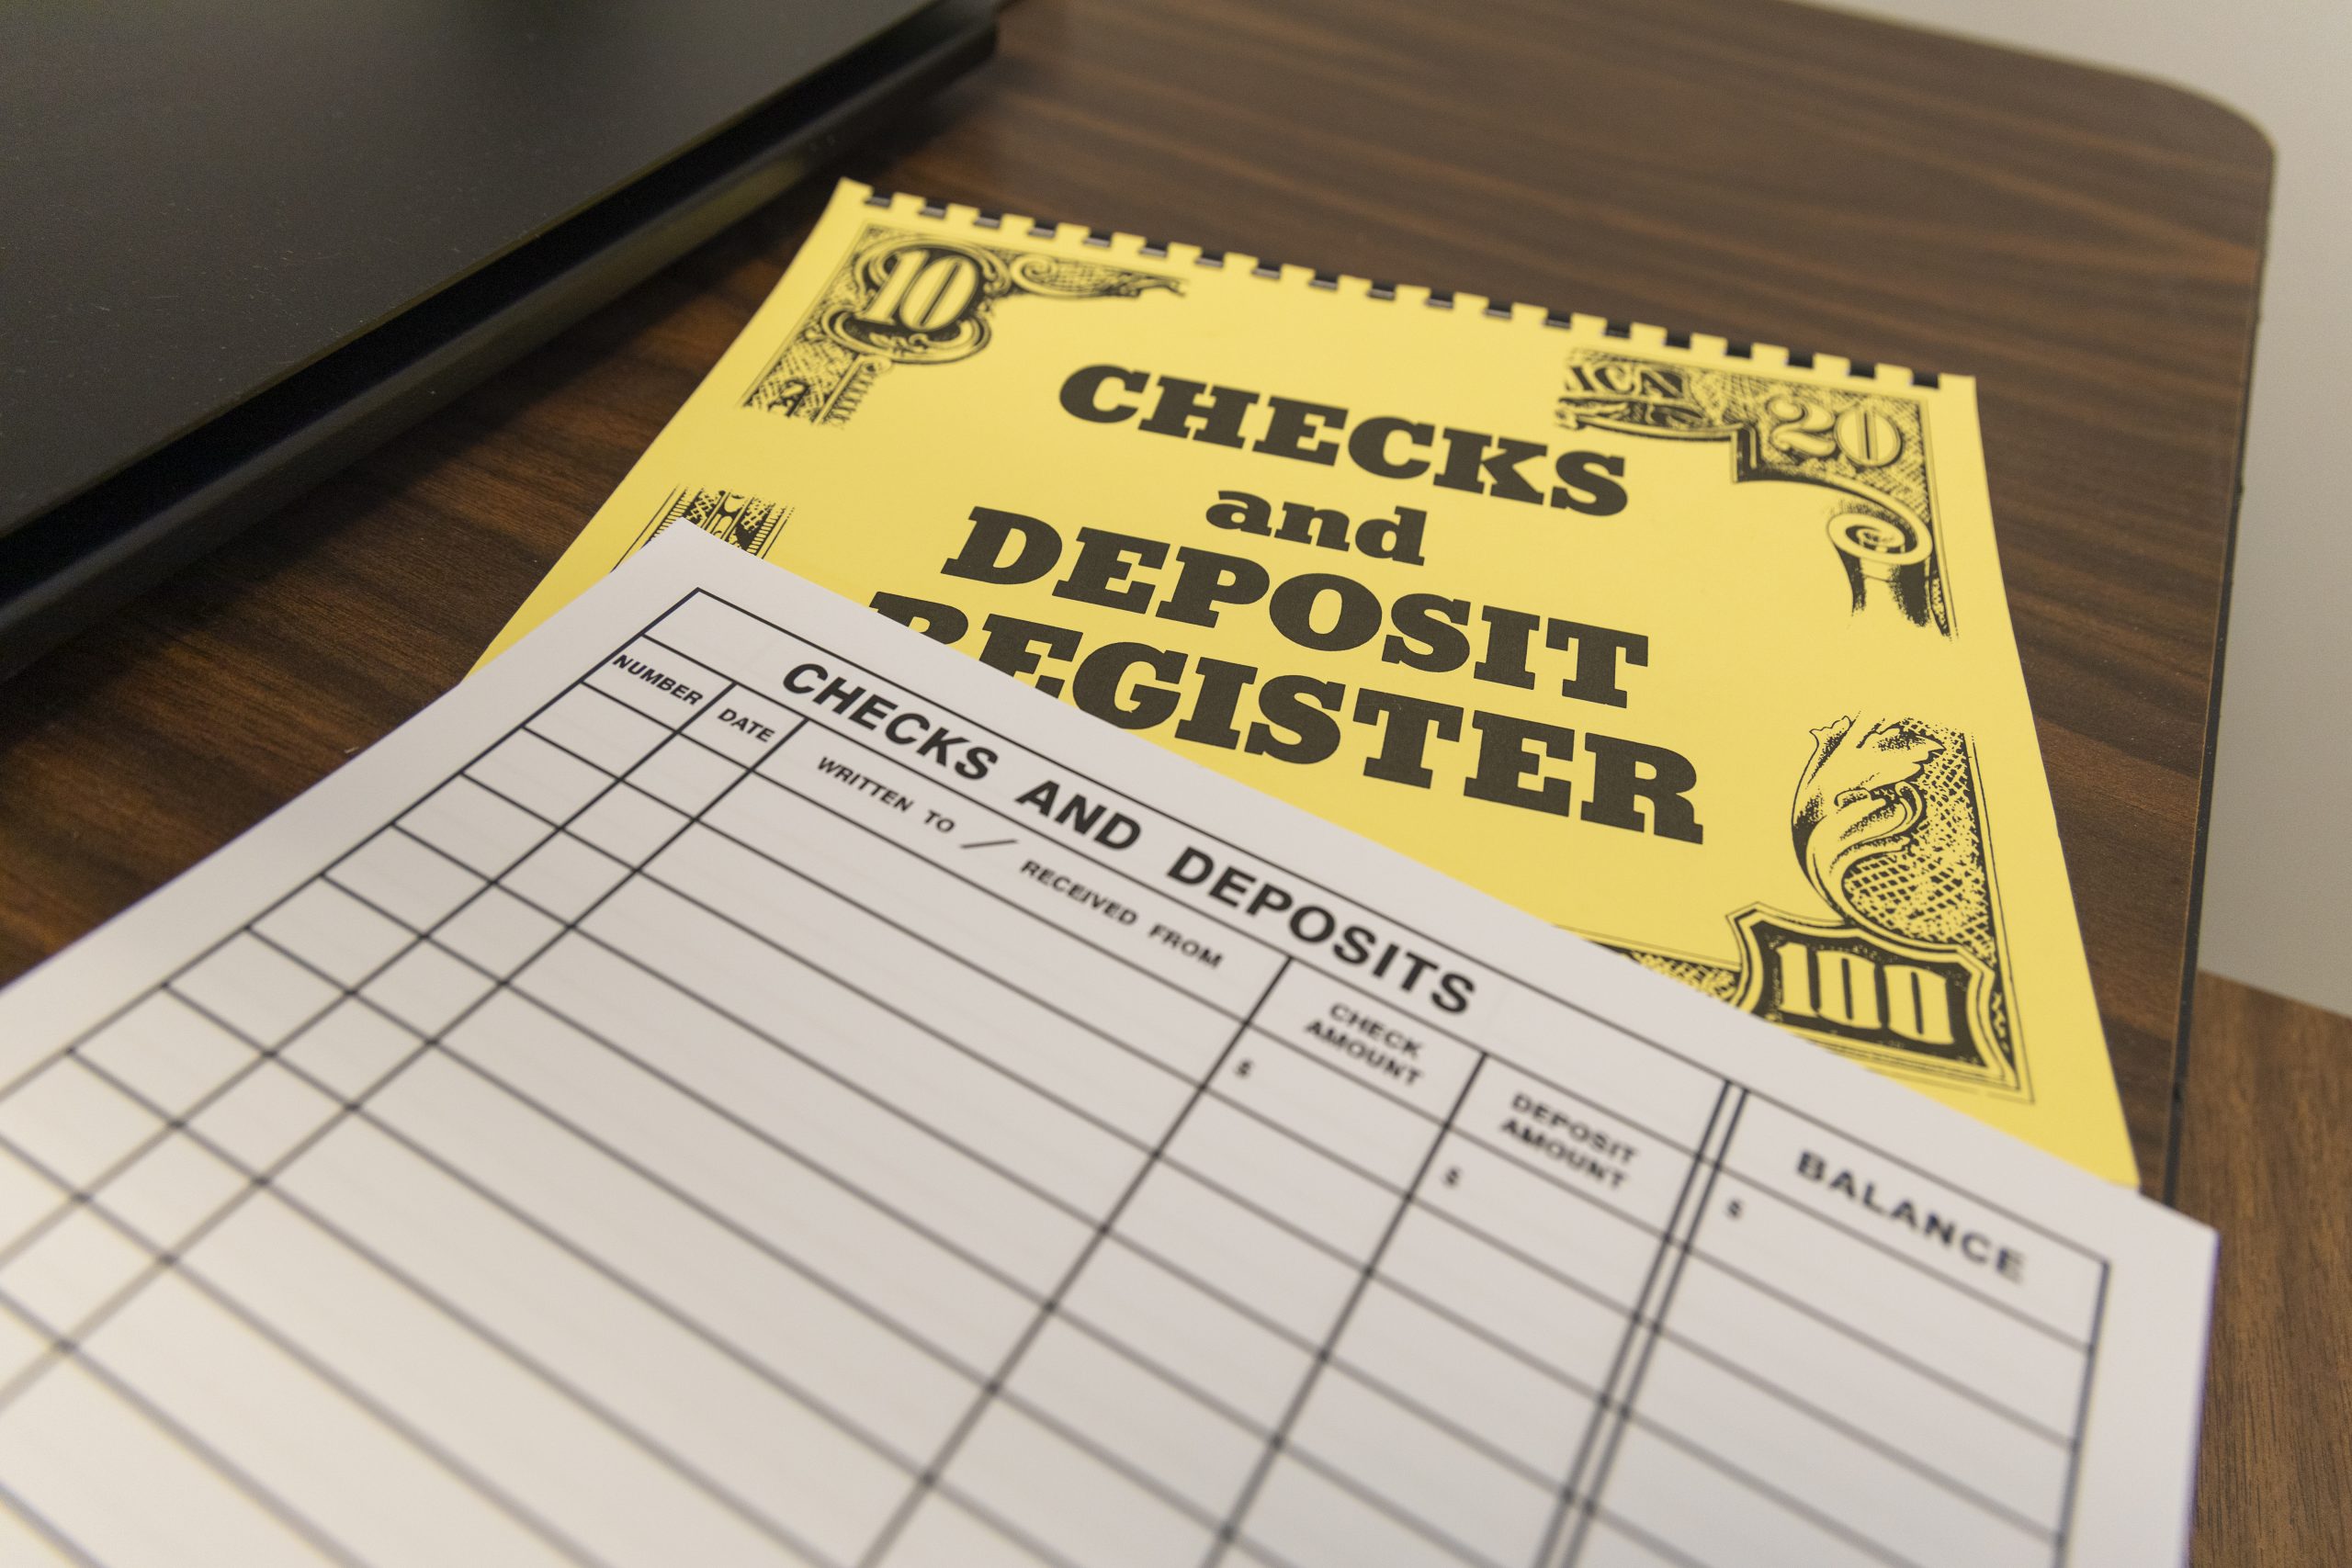 Checks and deposits book